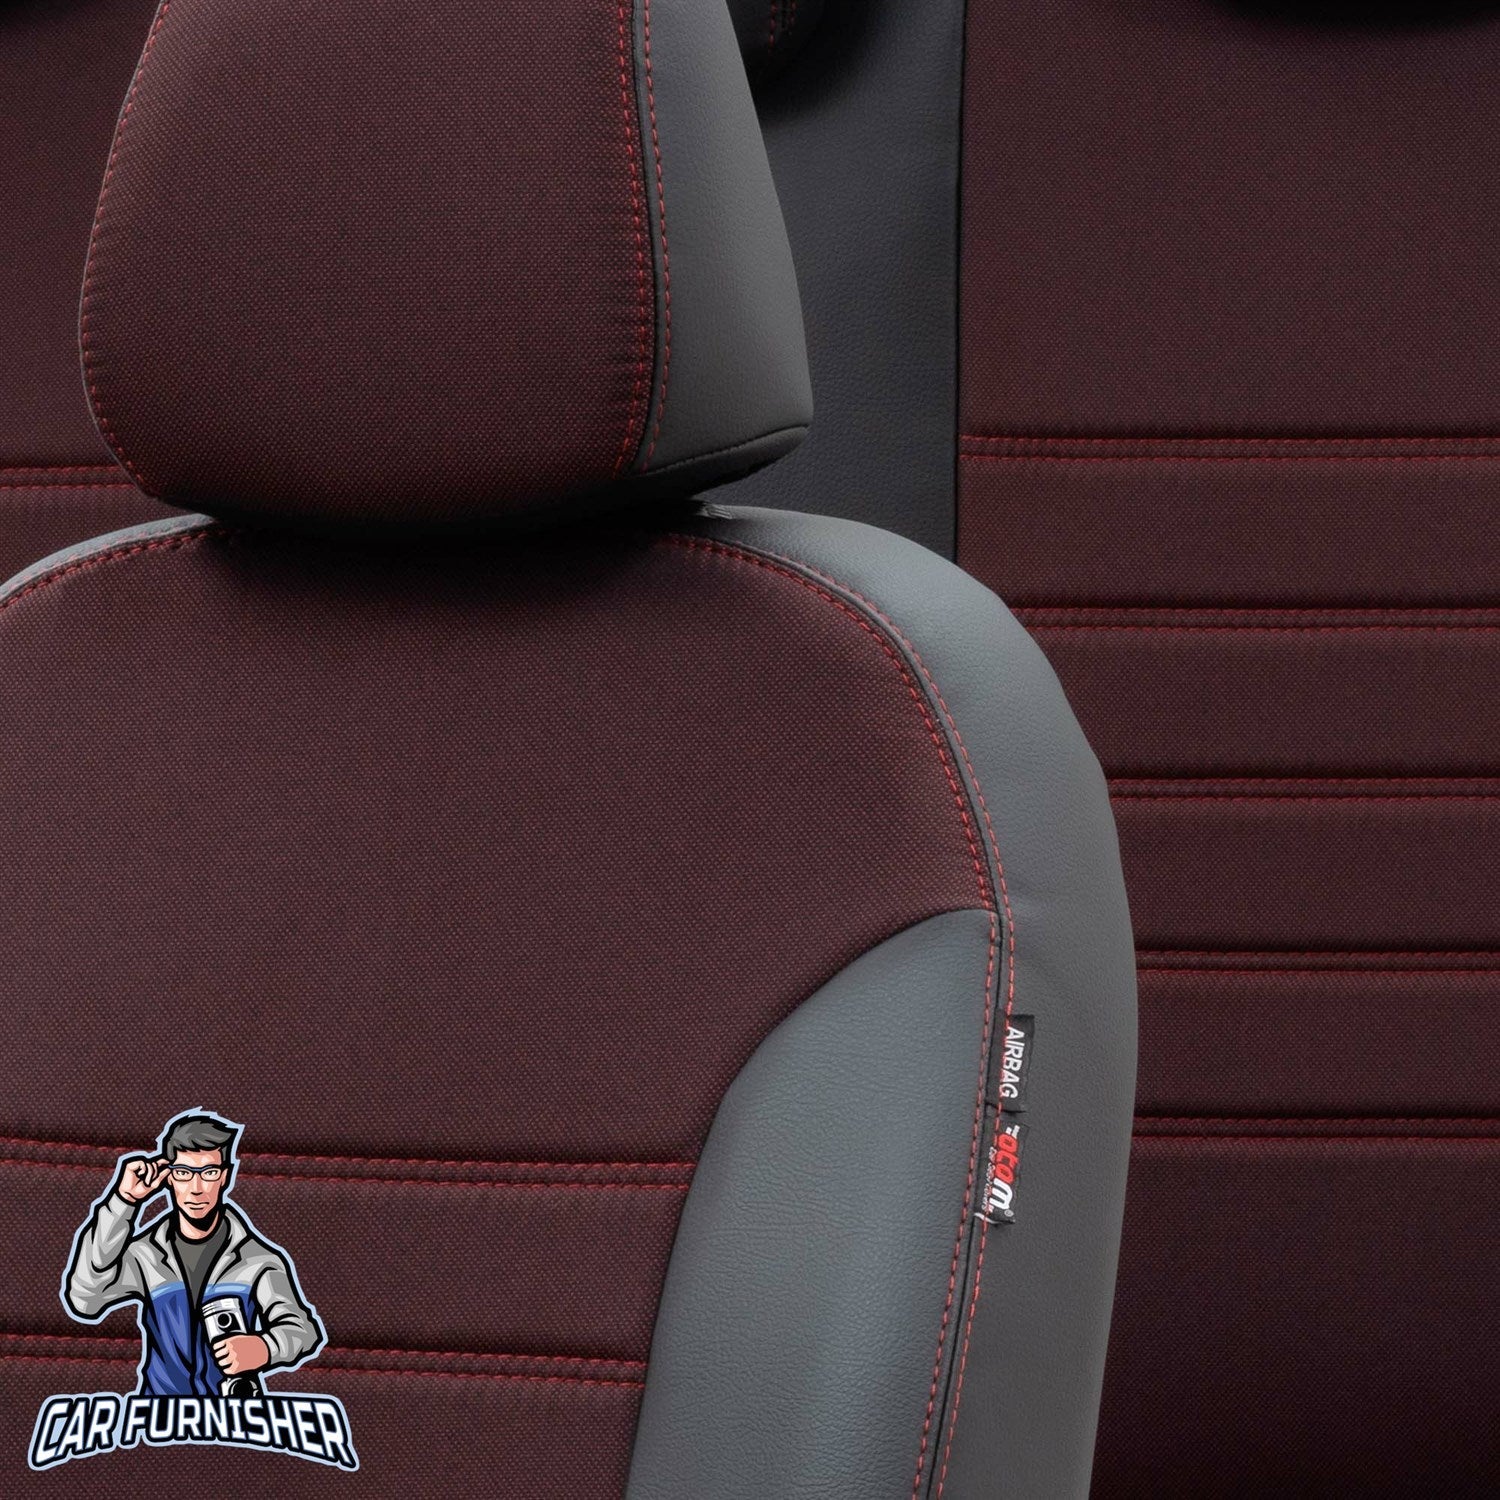 Volvo S80 Car Seat Cover 2006-2016 D3/D4/D5/T6 Paris Design Red Full Set (5 Seats + Handrest) Leather & Fabric